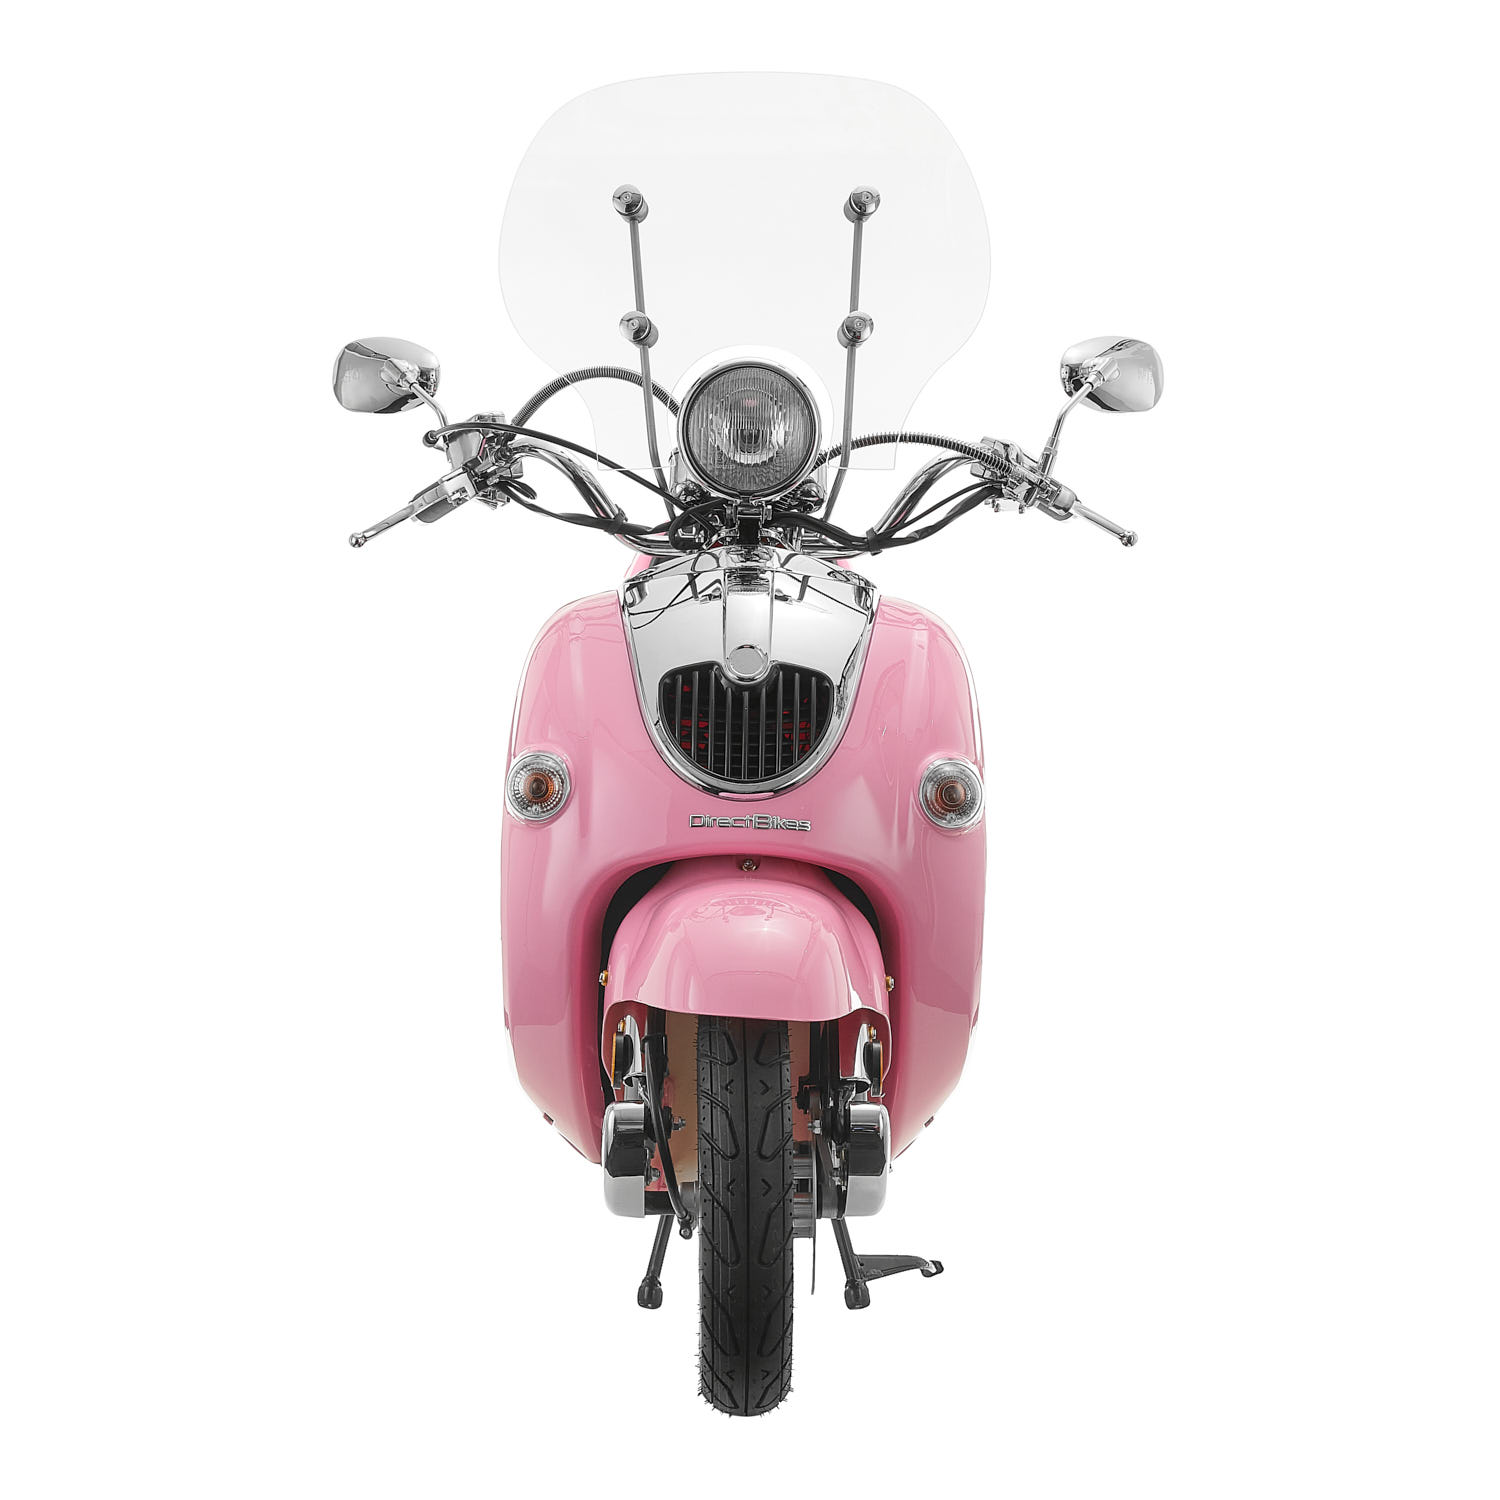 https://www.mopeds.co.uk/scooters/large/40-13-2.jpg